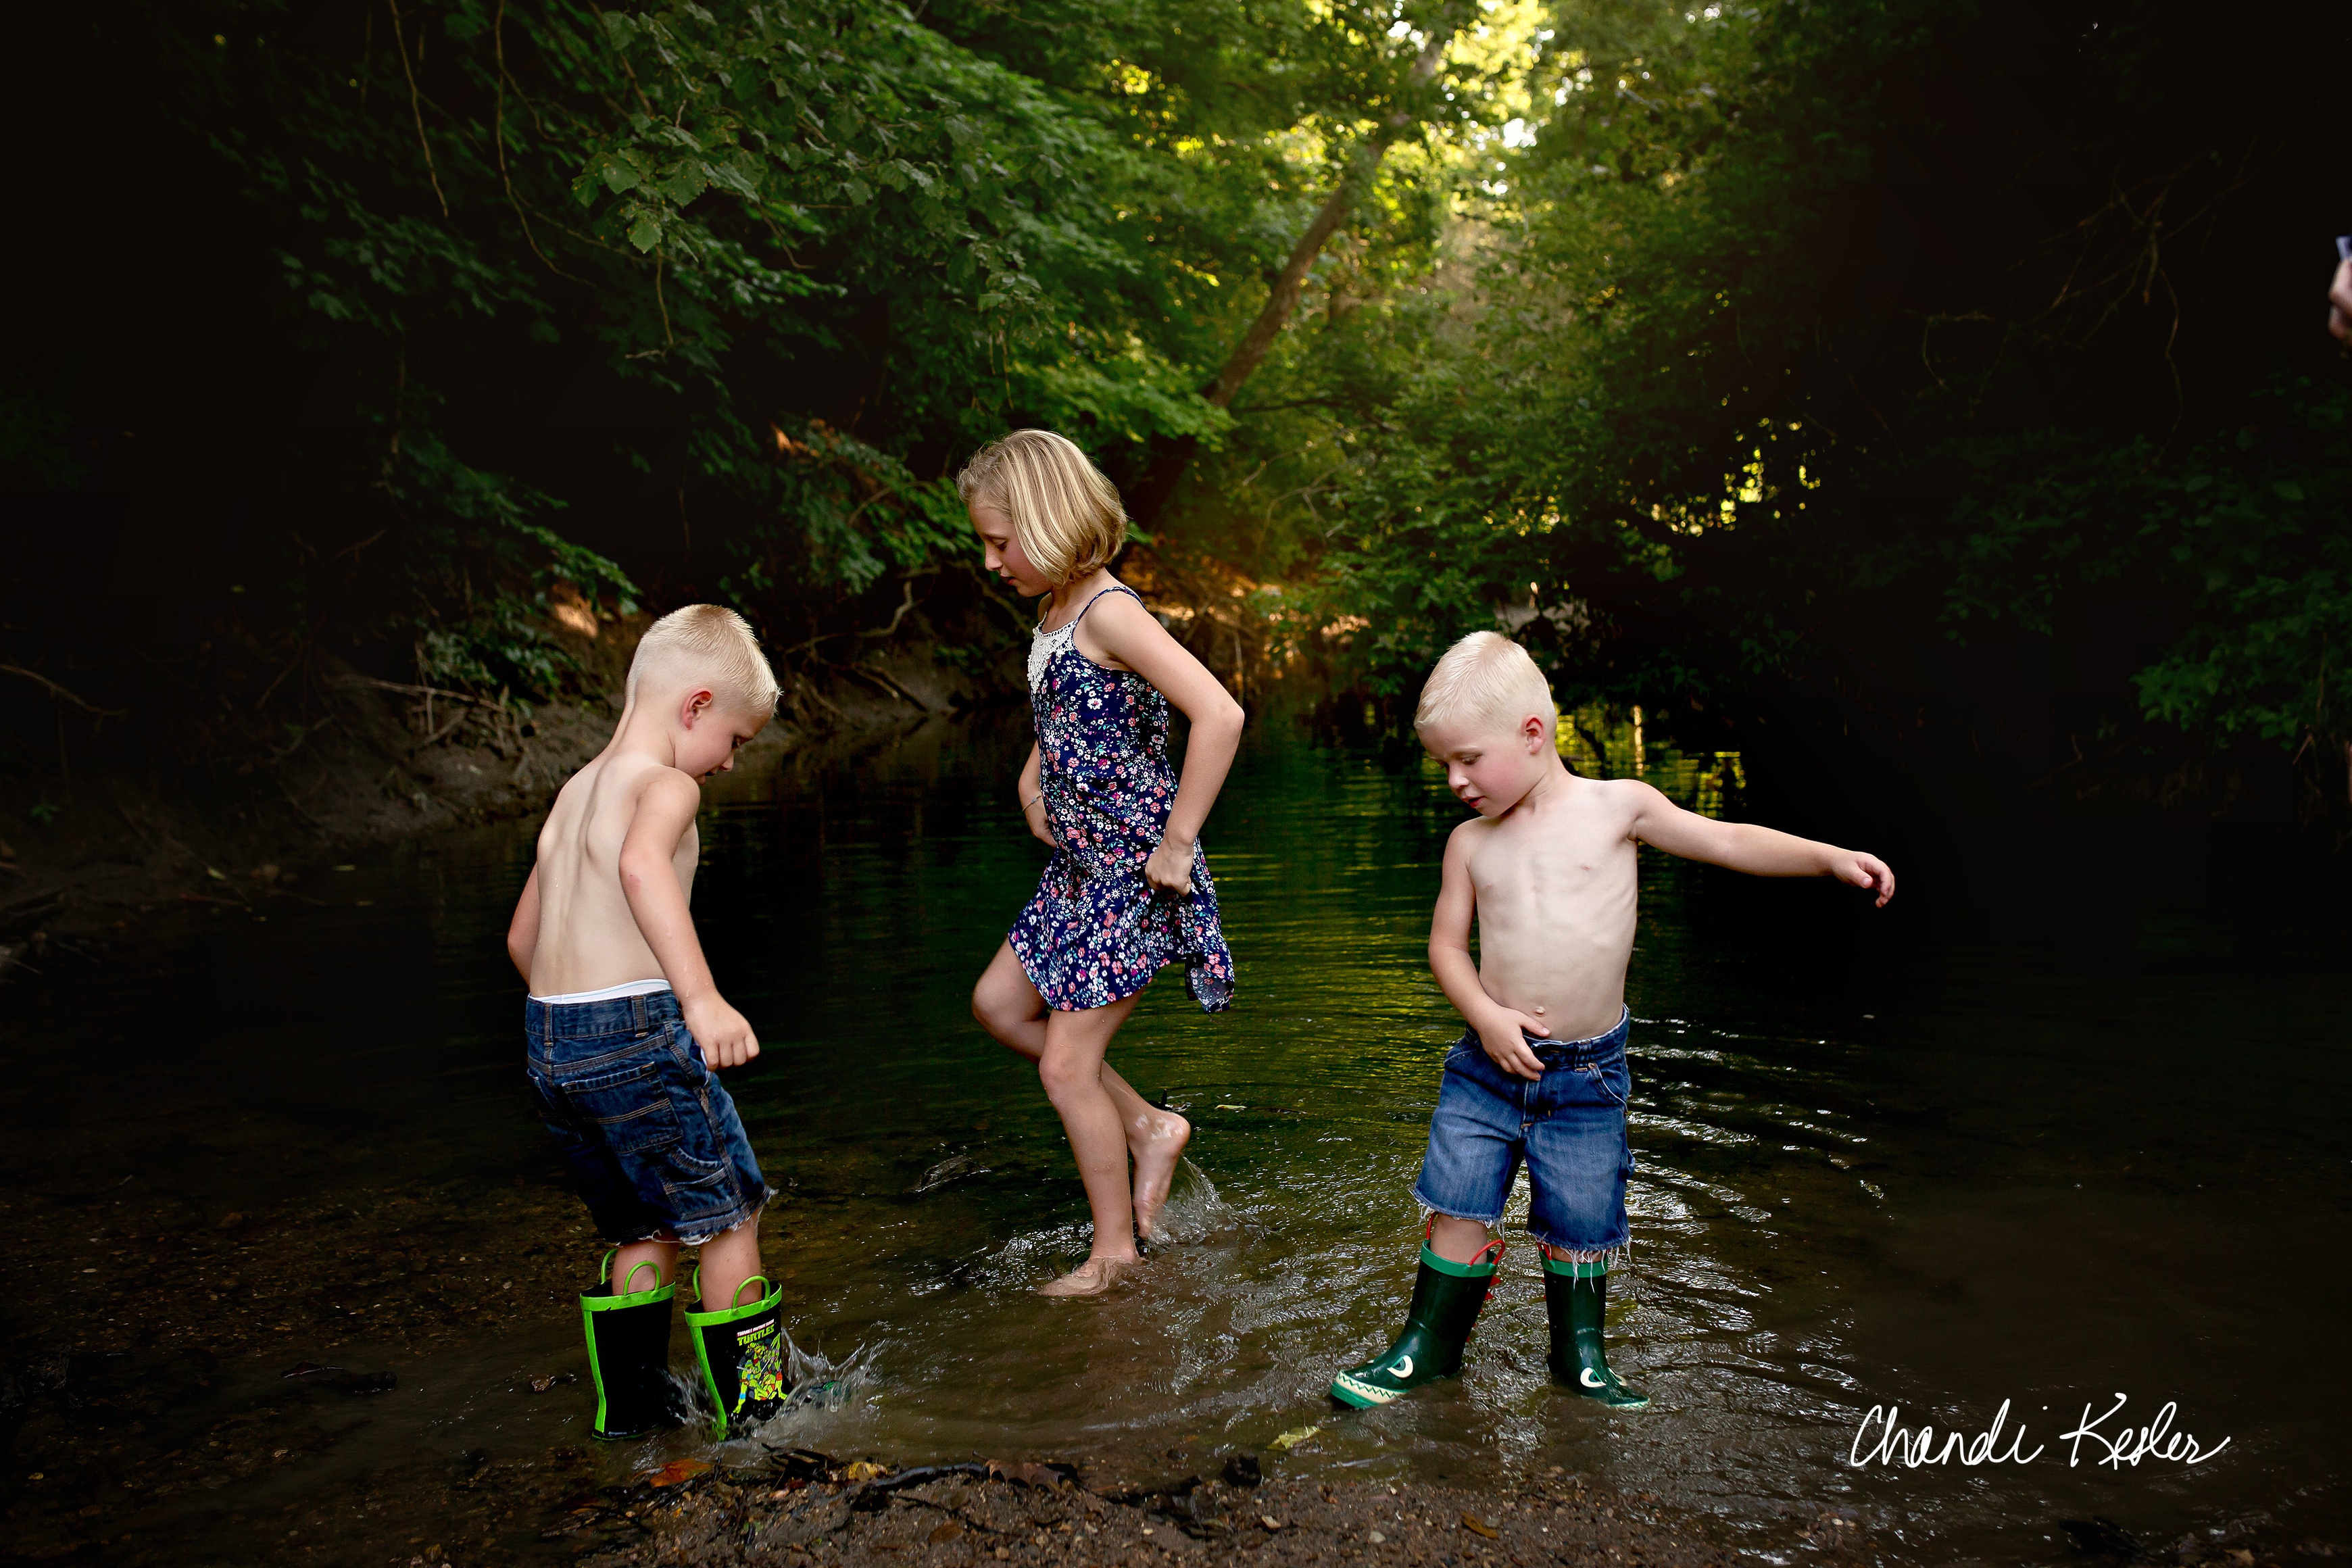 Decatur IL Photographer | Sunset Creek | Chandi Kesler Photography | Creek Pictures